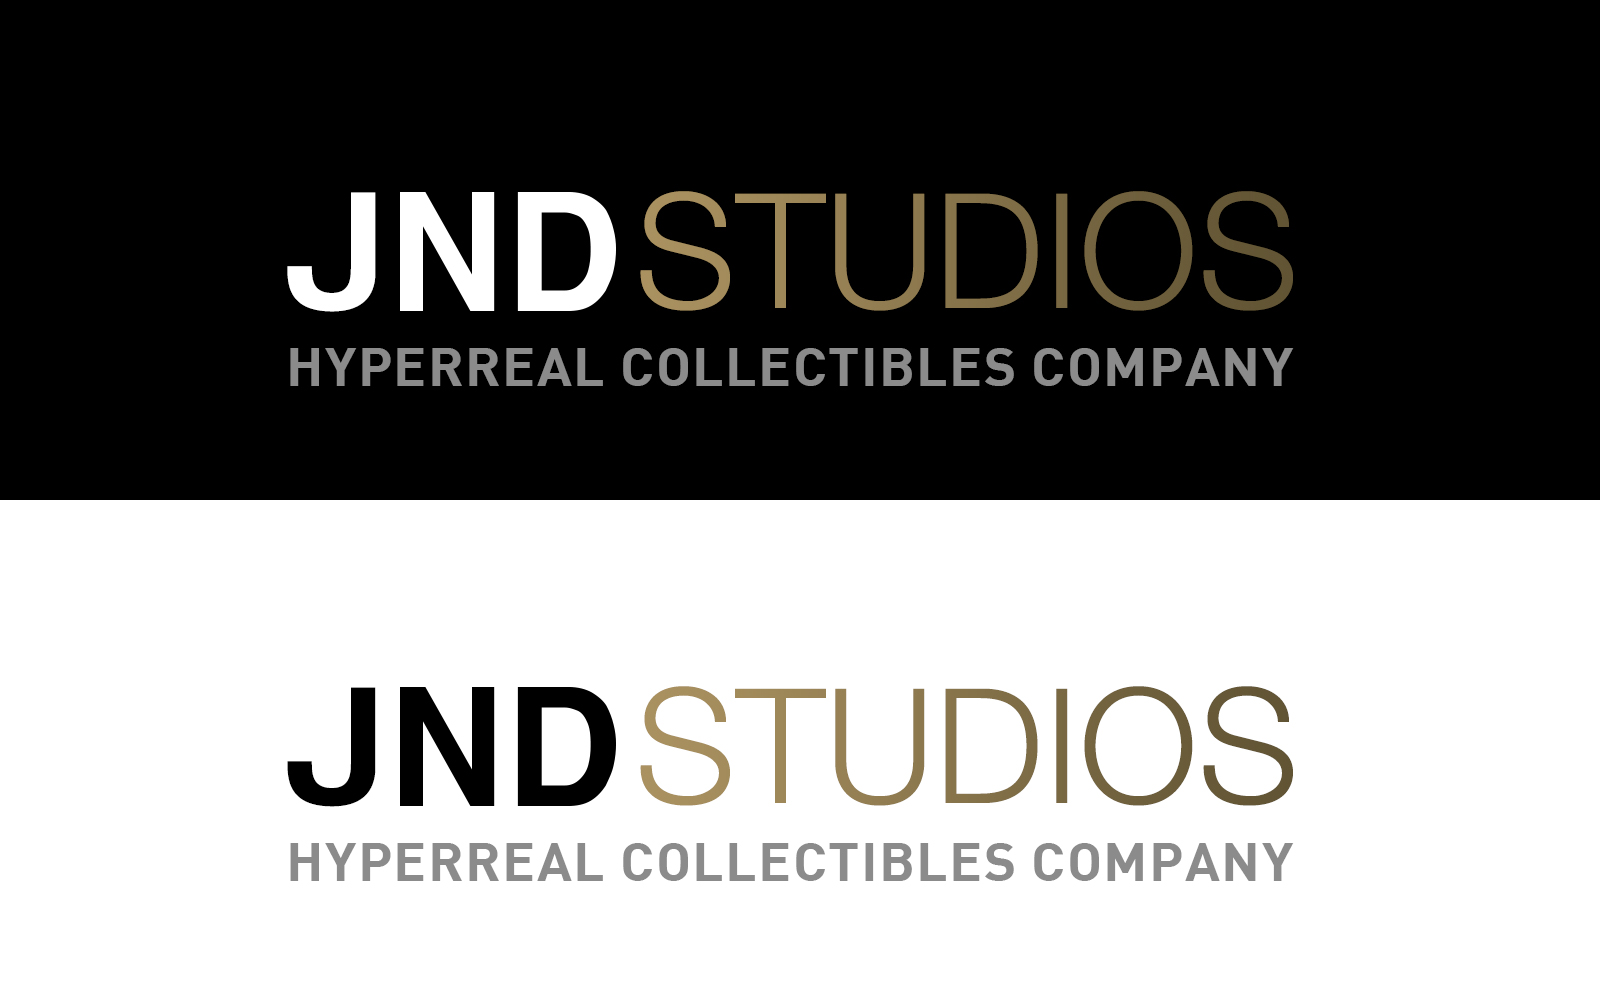 JND Studios Co., Ltd. logo image